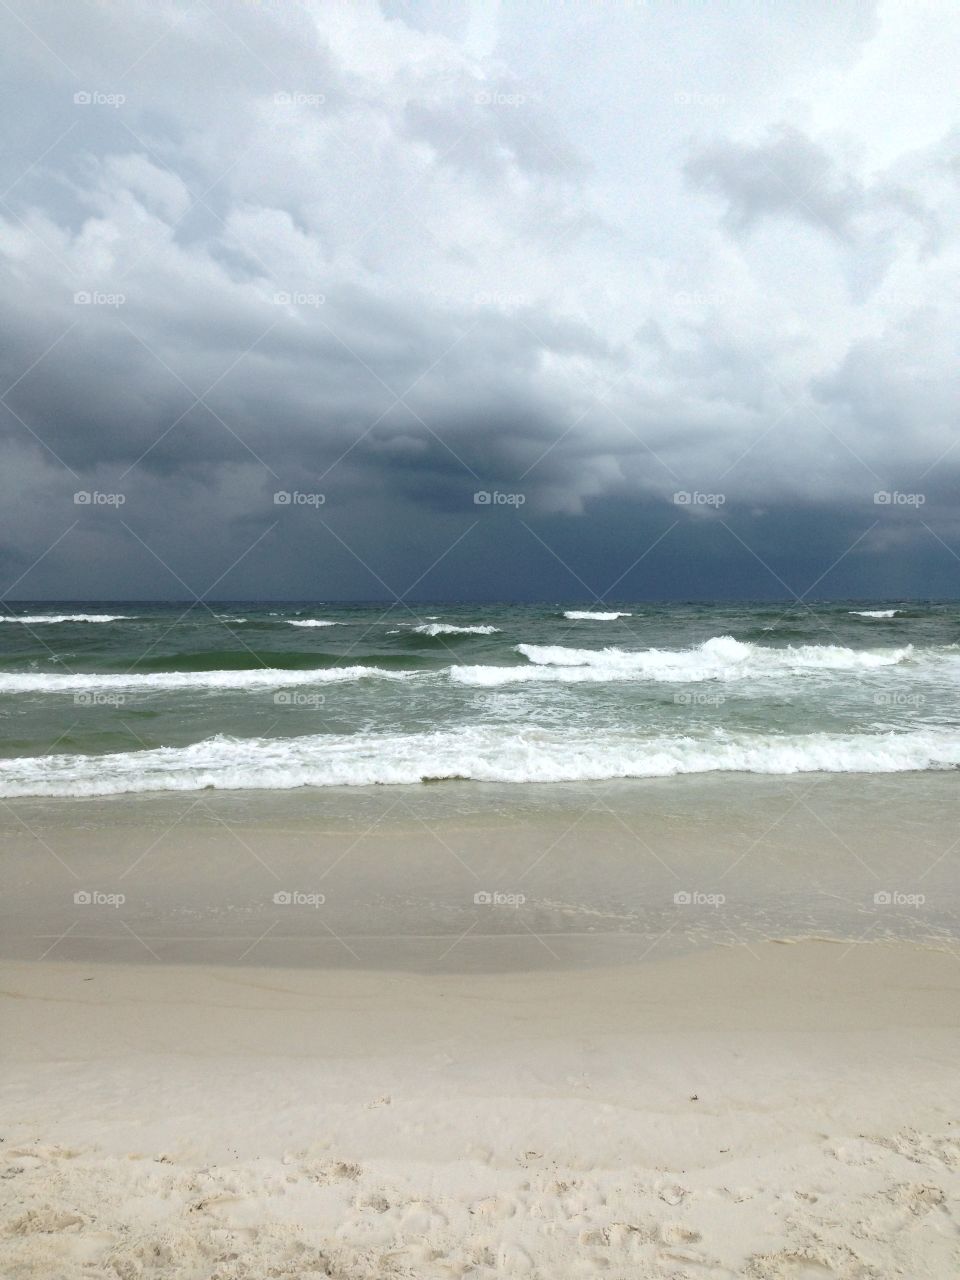 Eerie Waves
Panama City Beach, Florida